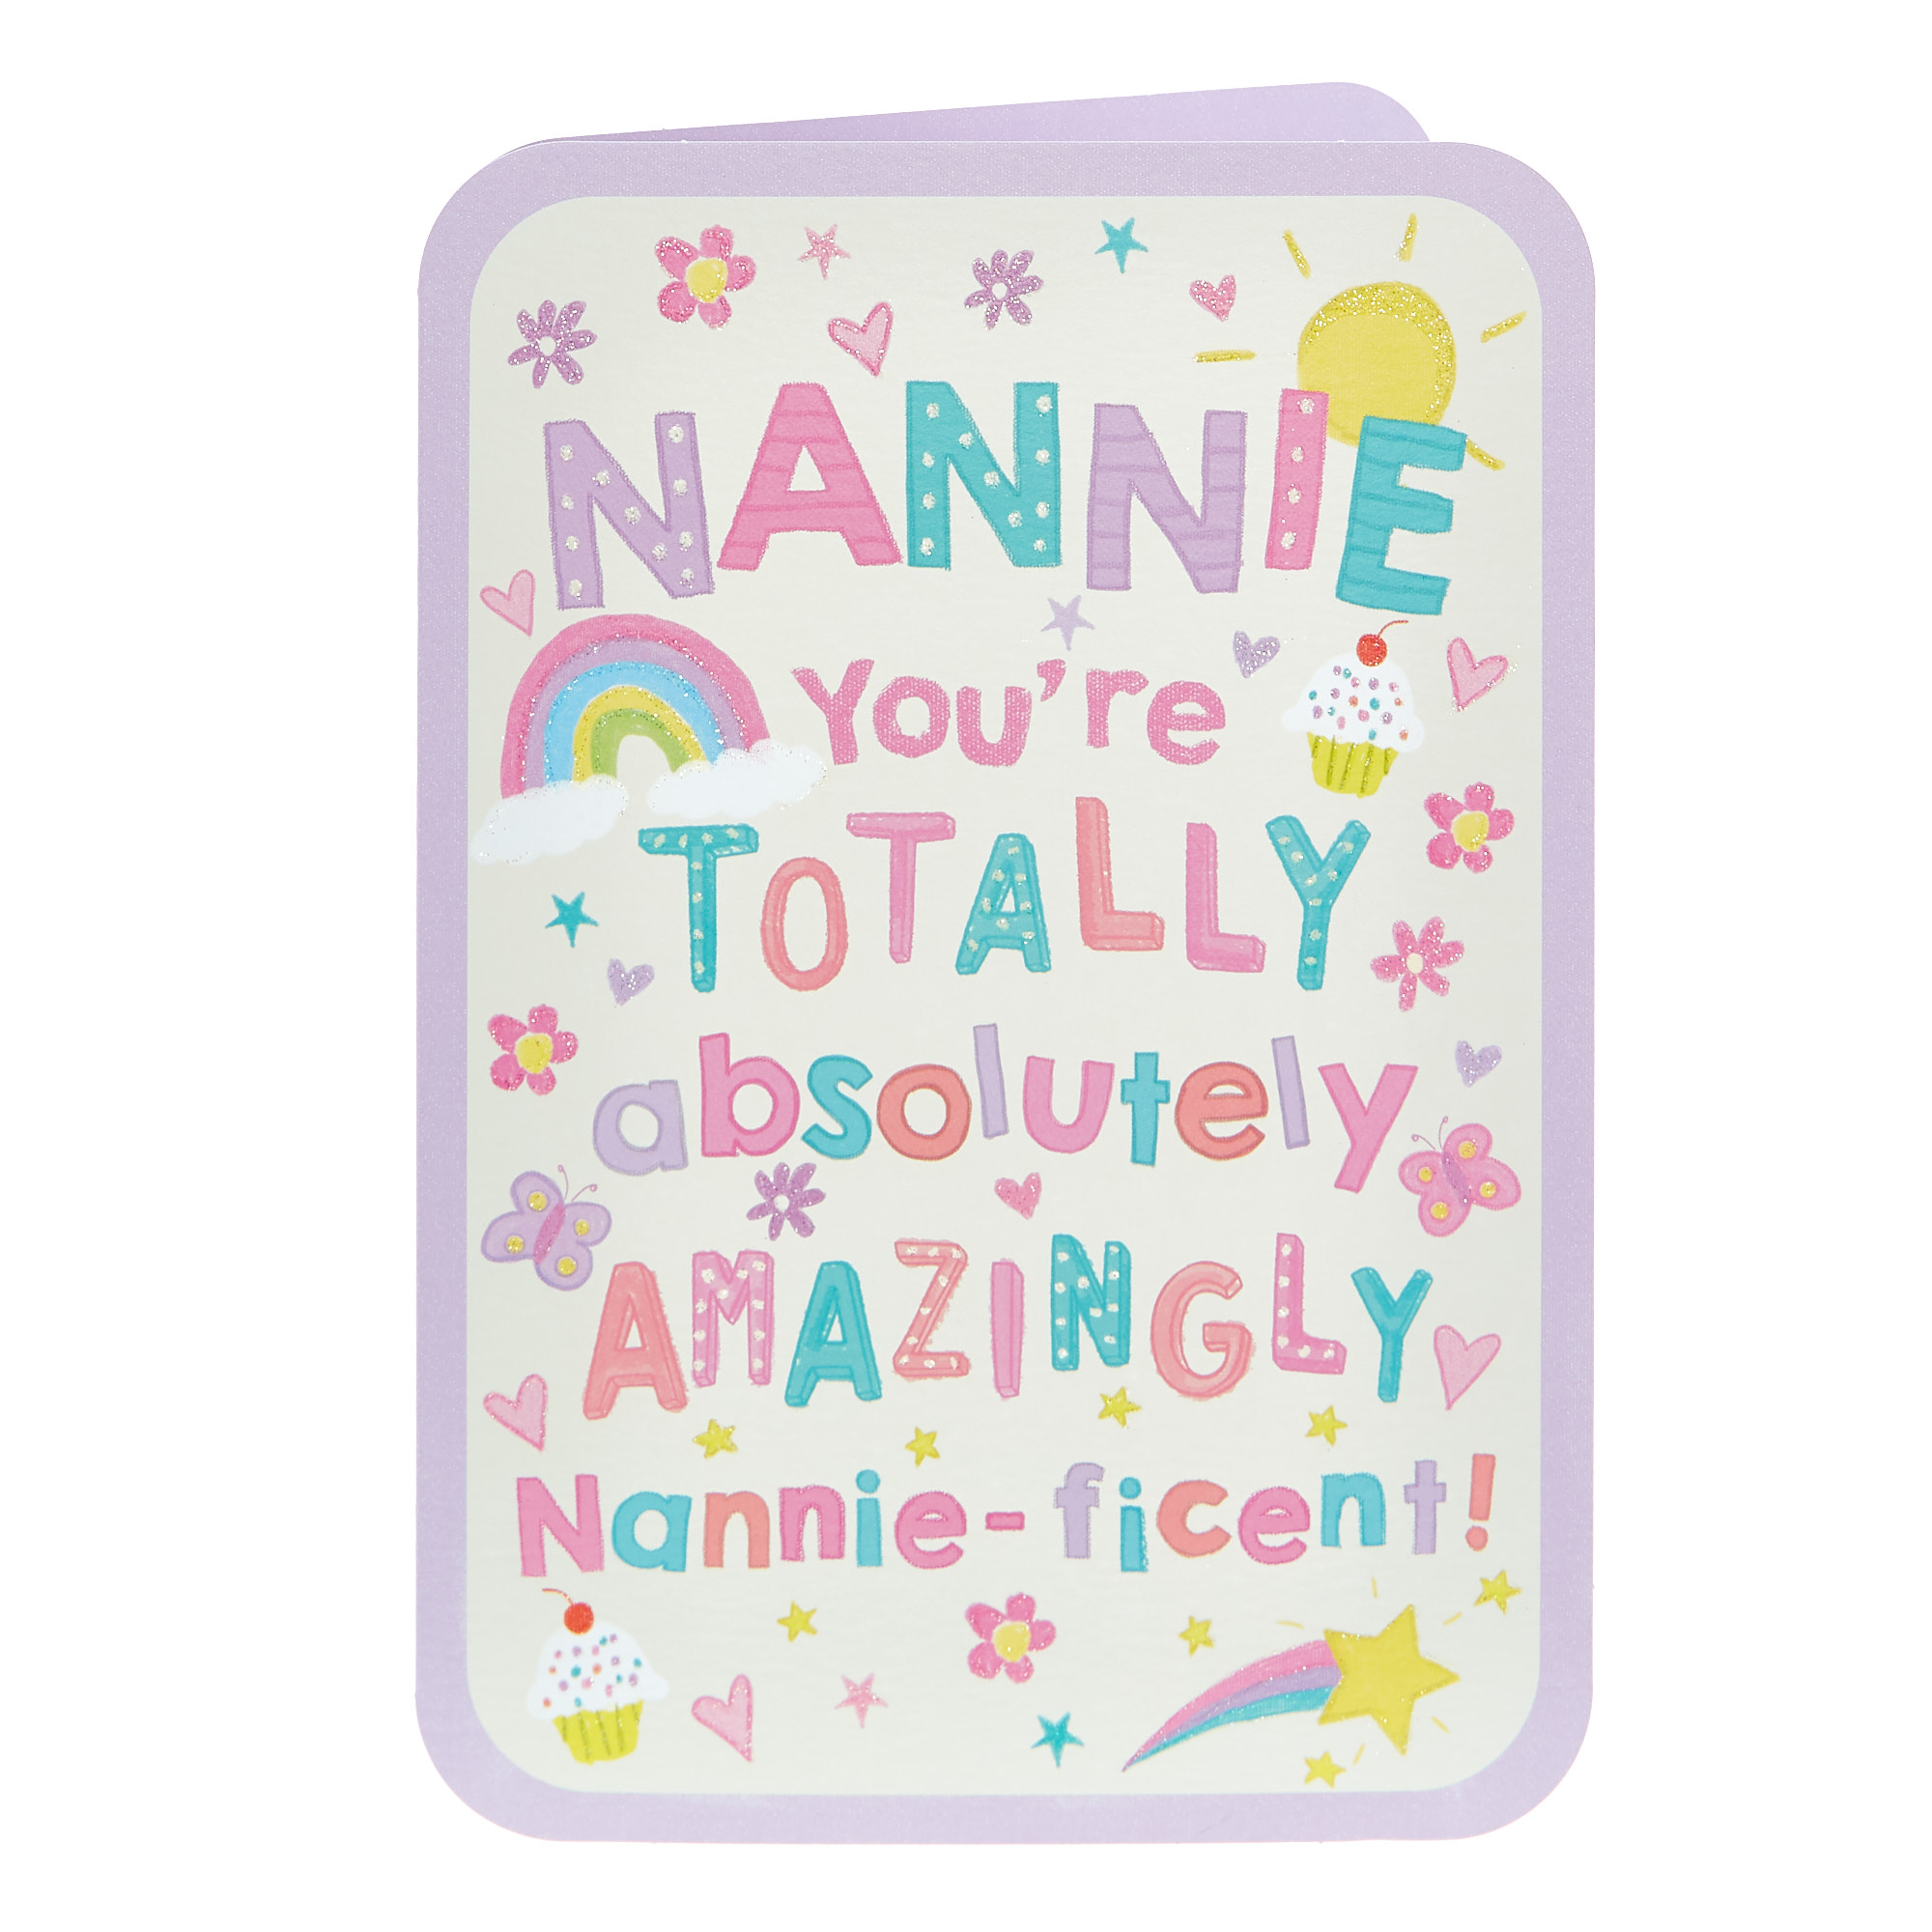 Birthday Card - Nannie-ficent!